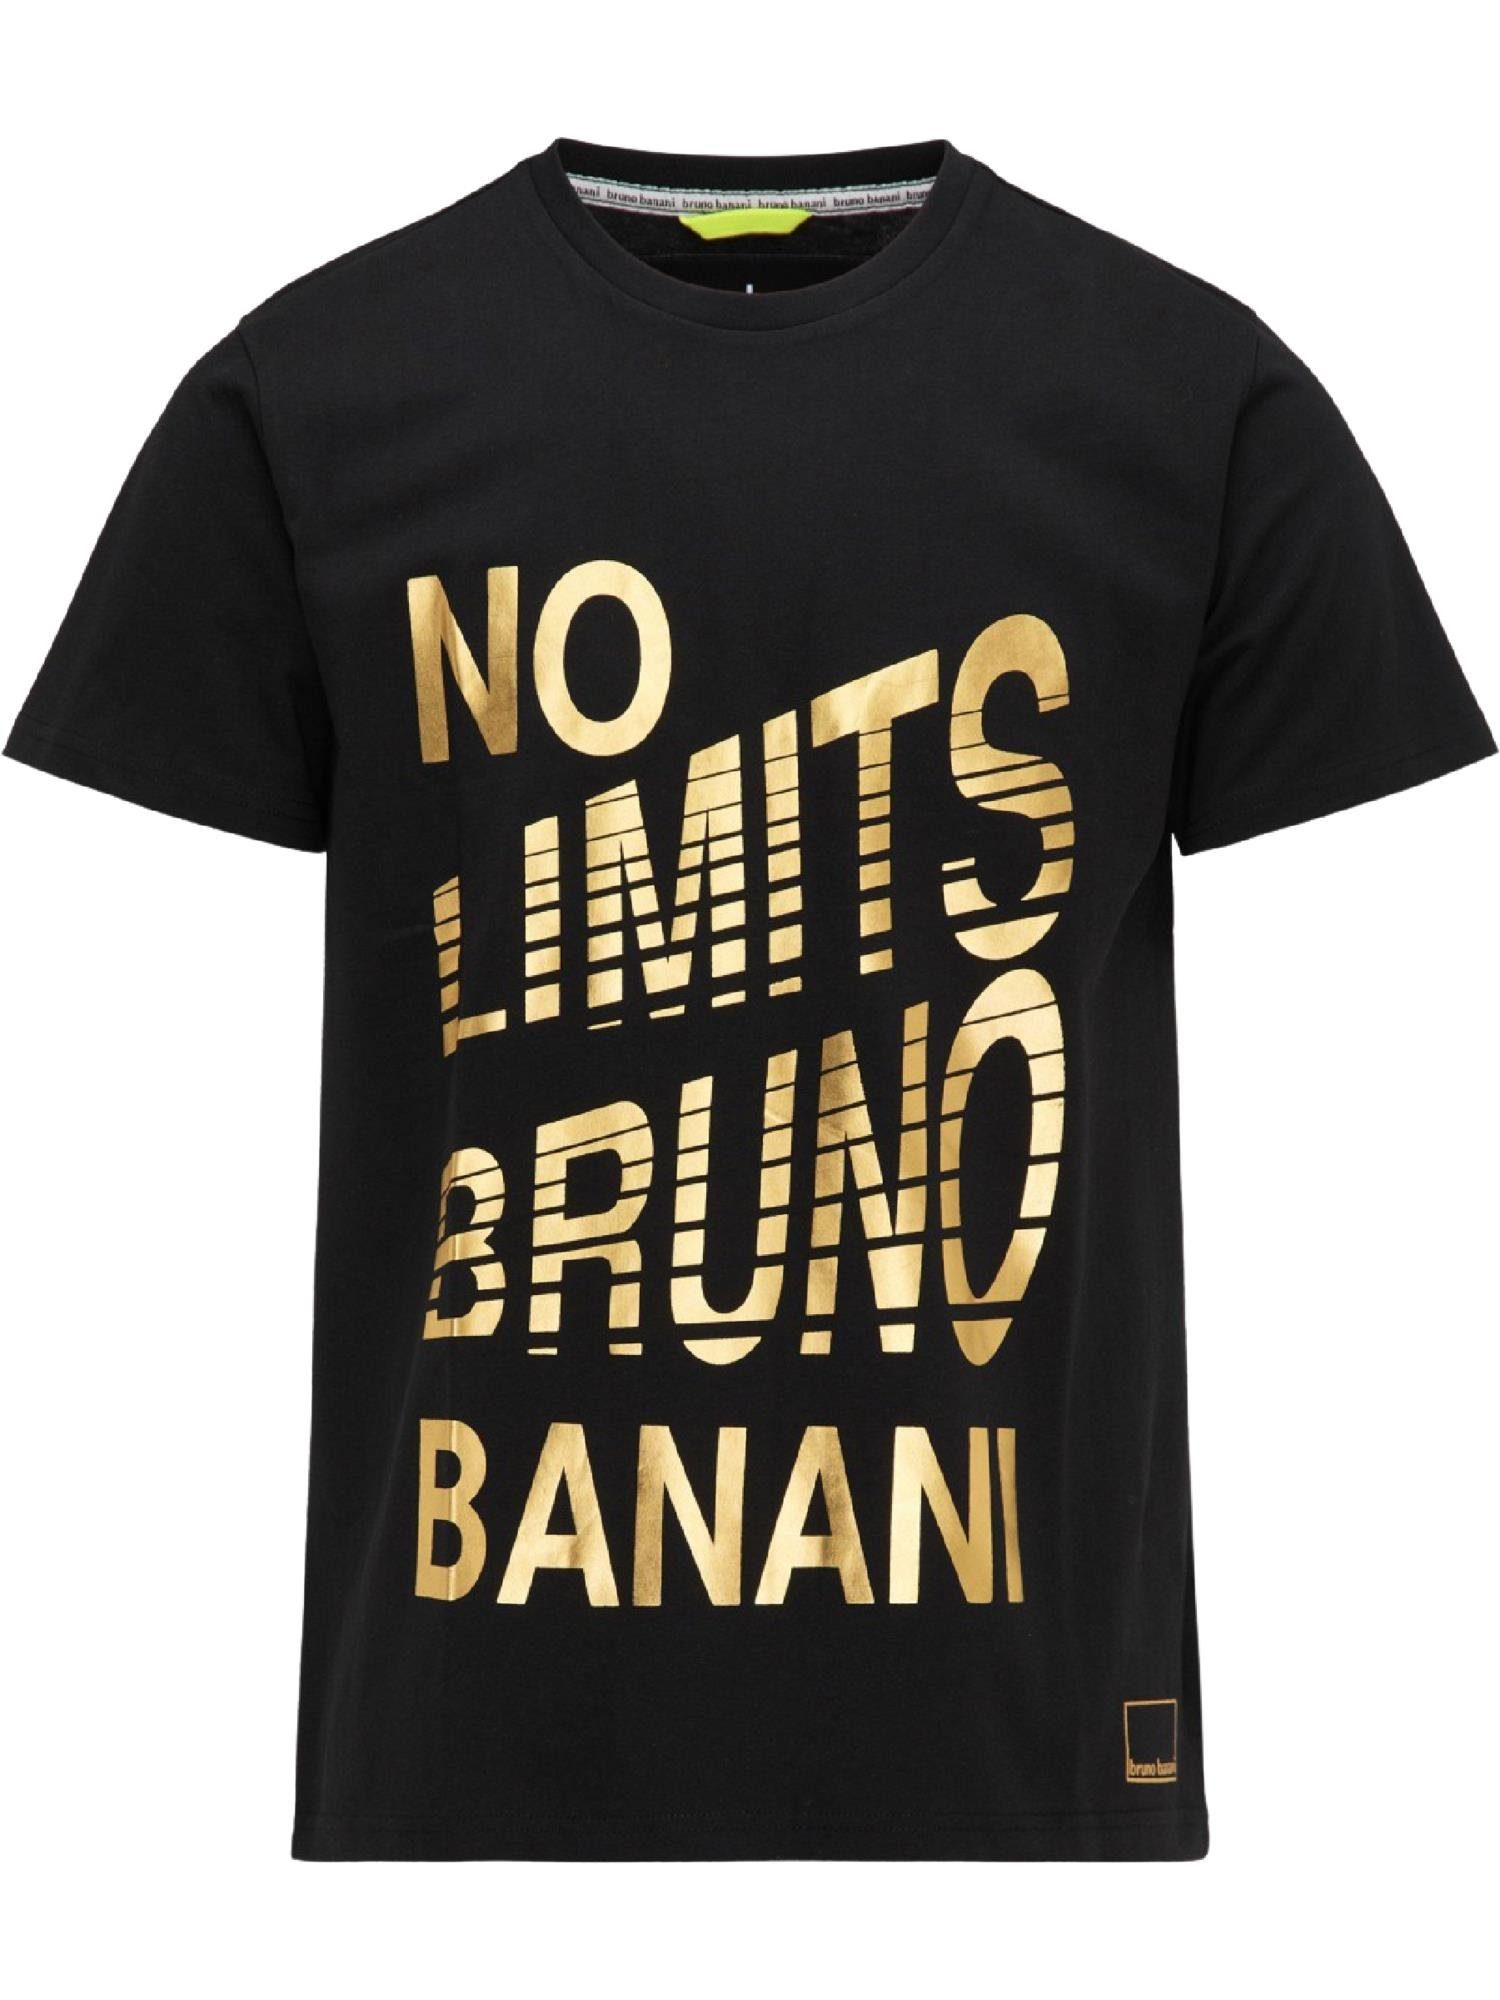 T-Shirt SULLIVAN Banani Bruno